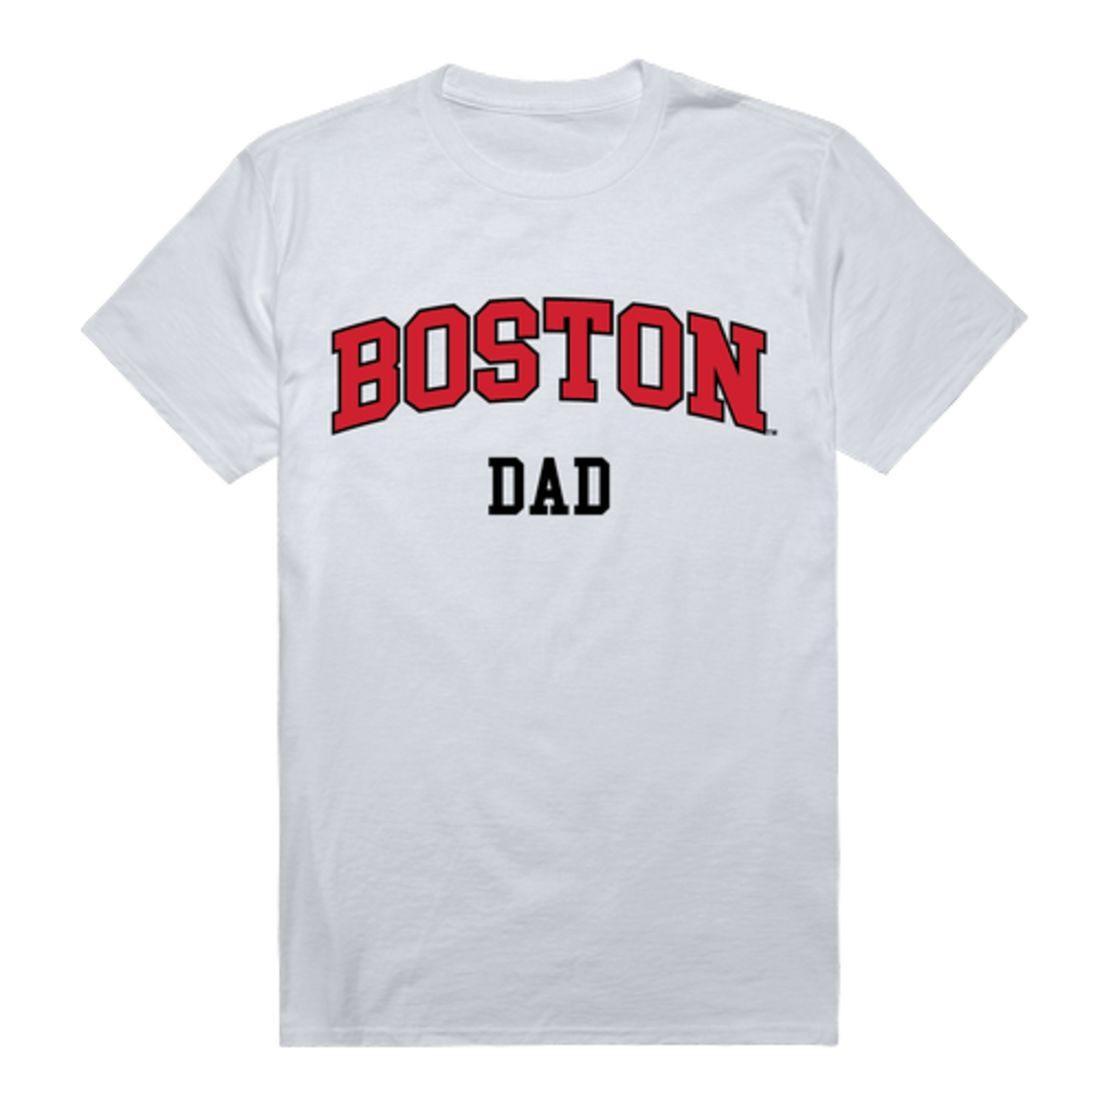 Boston University TerriersÊ College Dad T-Shirt, White / X-Large